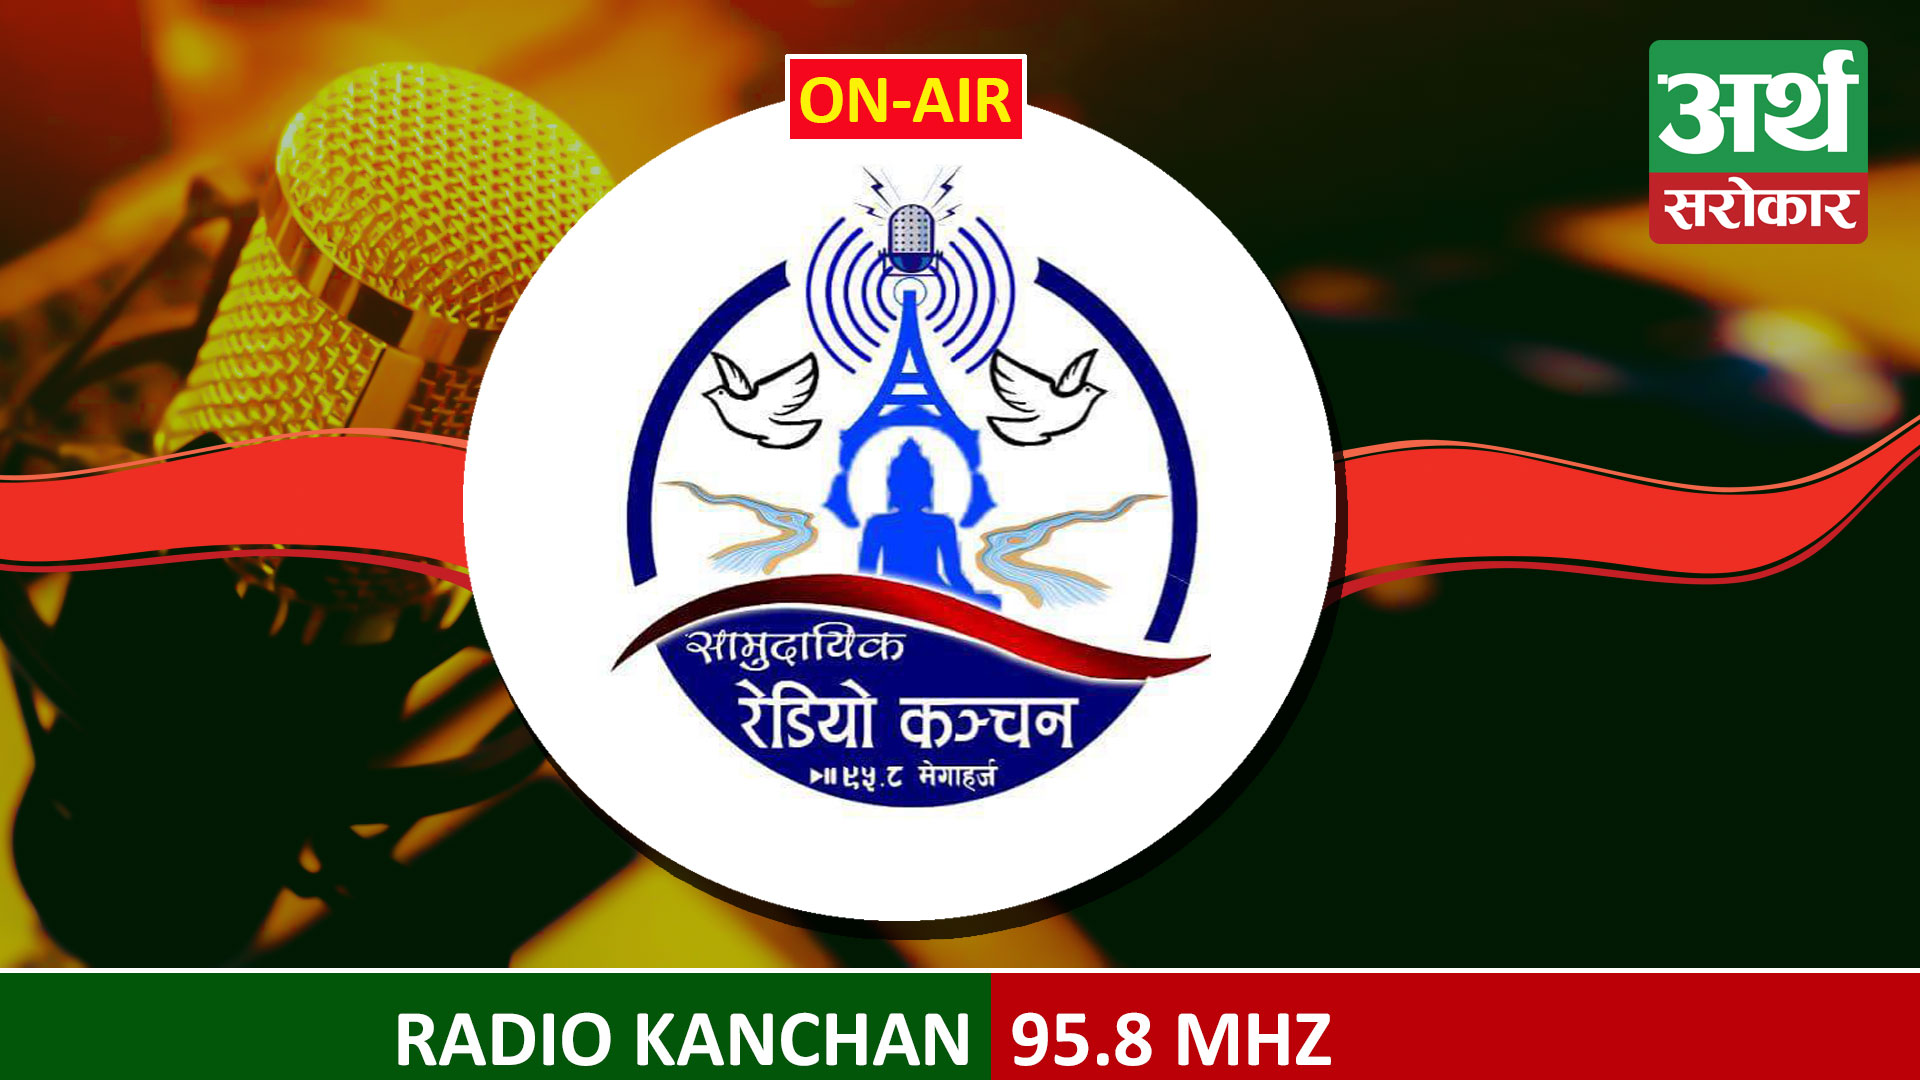 Radio Kanchan 95.8 mhz